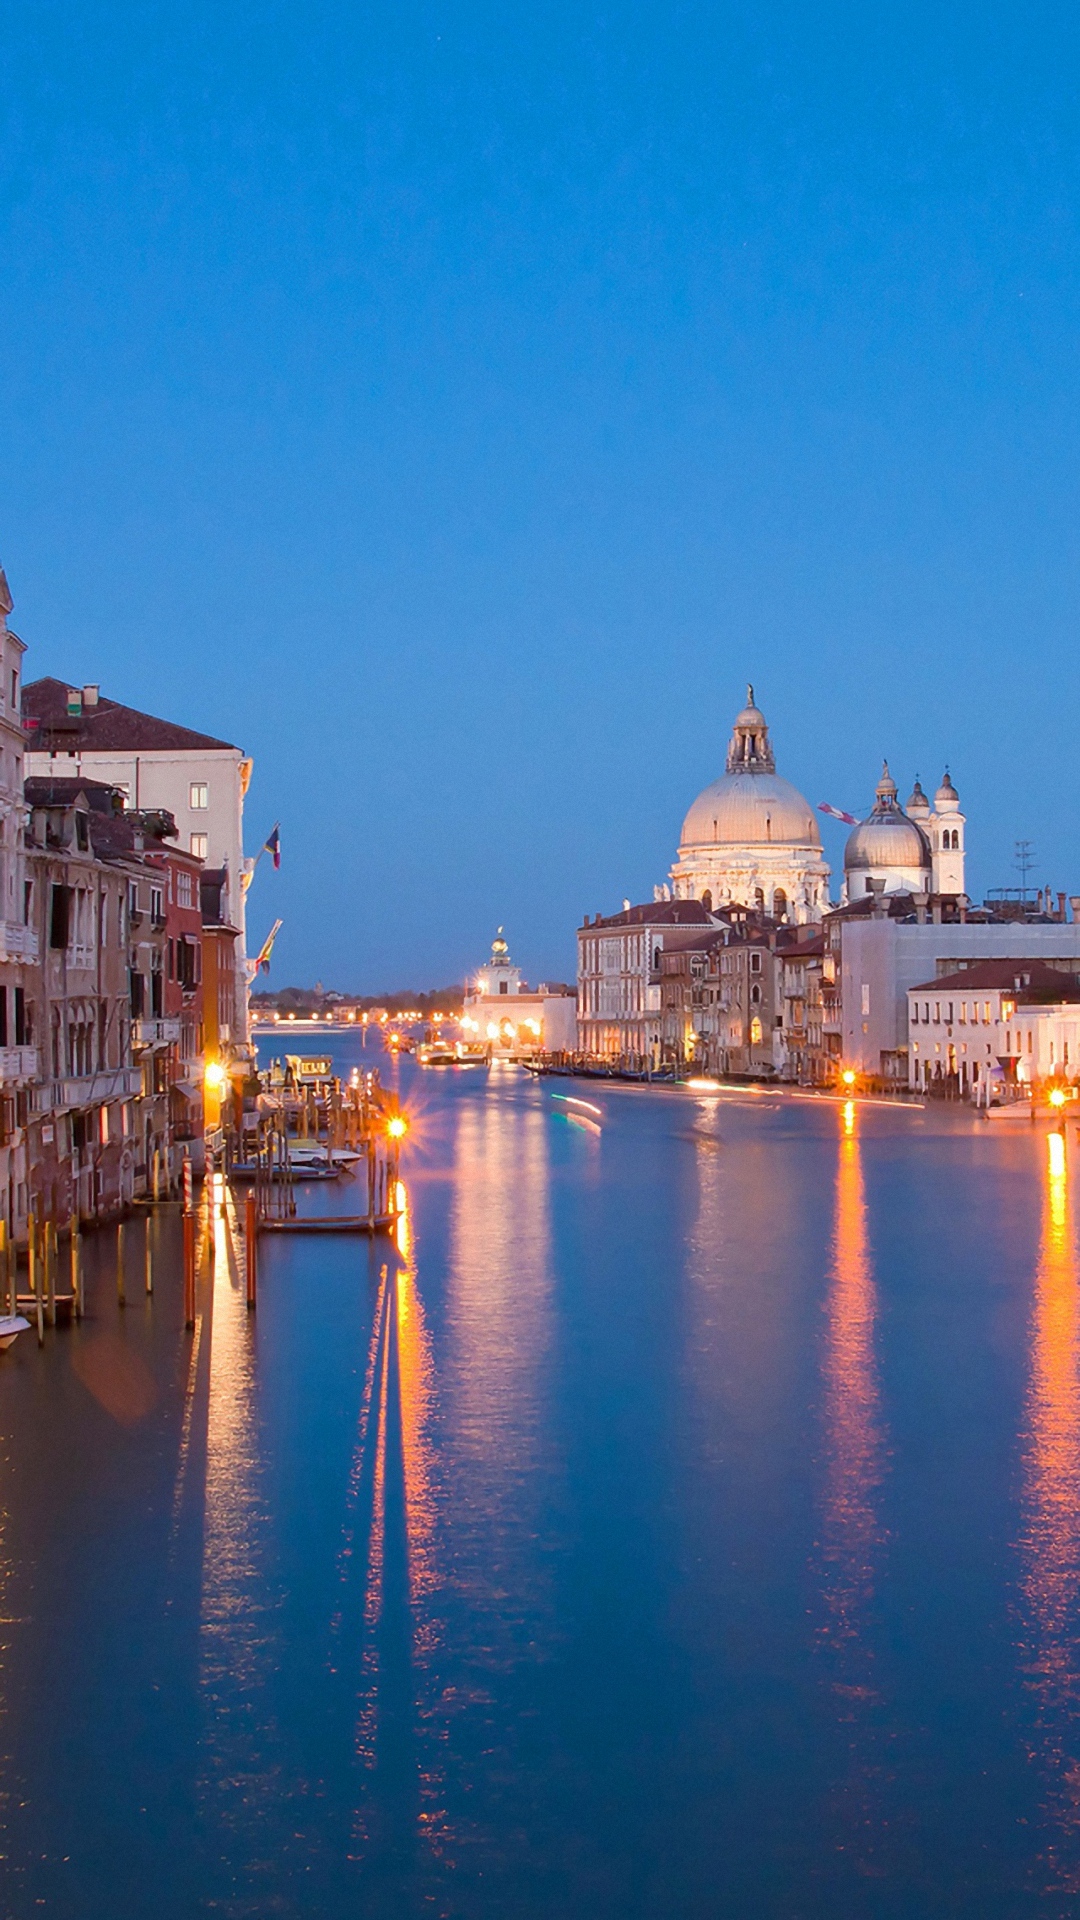 Hd Venice At Night Samsung Galaxy A7 Wallpapers - Grand Canal - 1080x1920  Wallpaper 